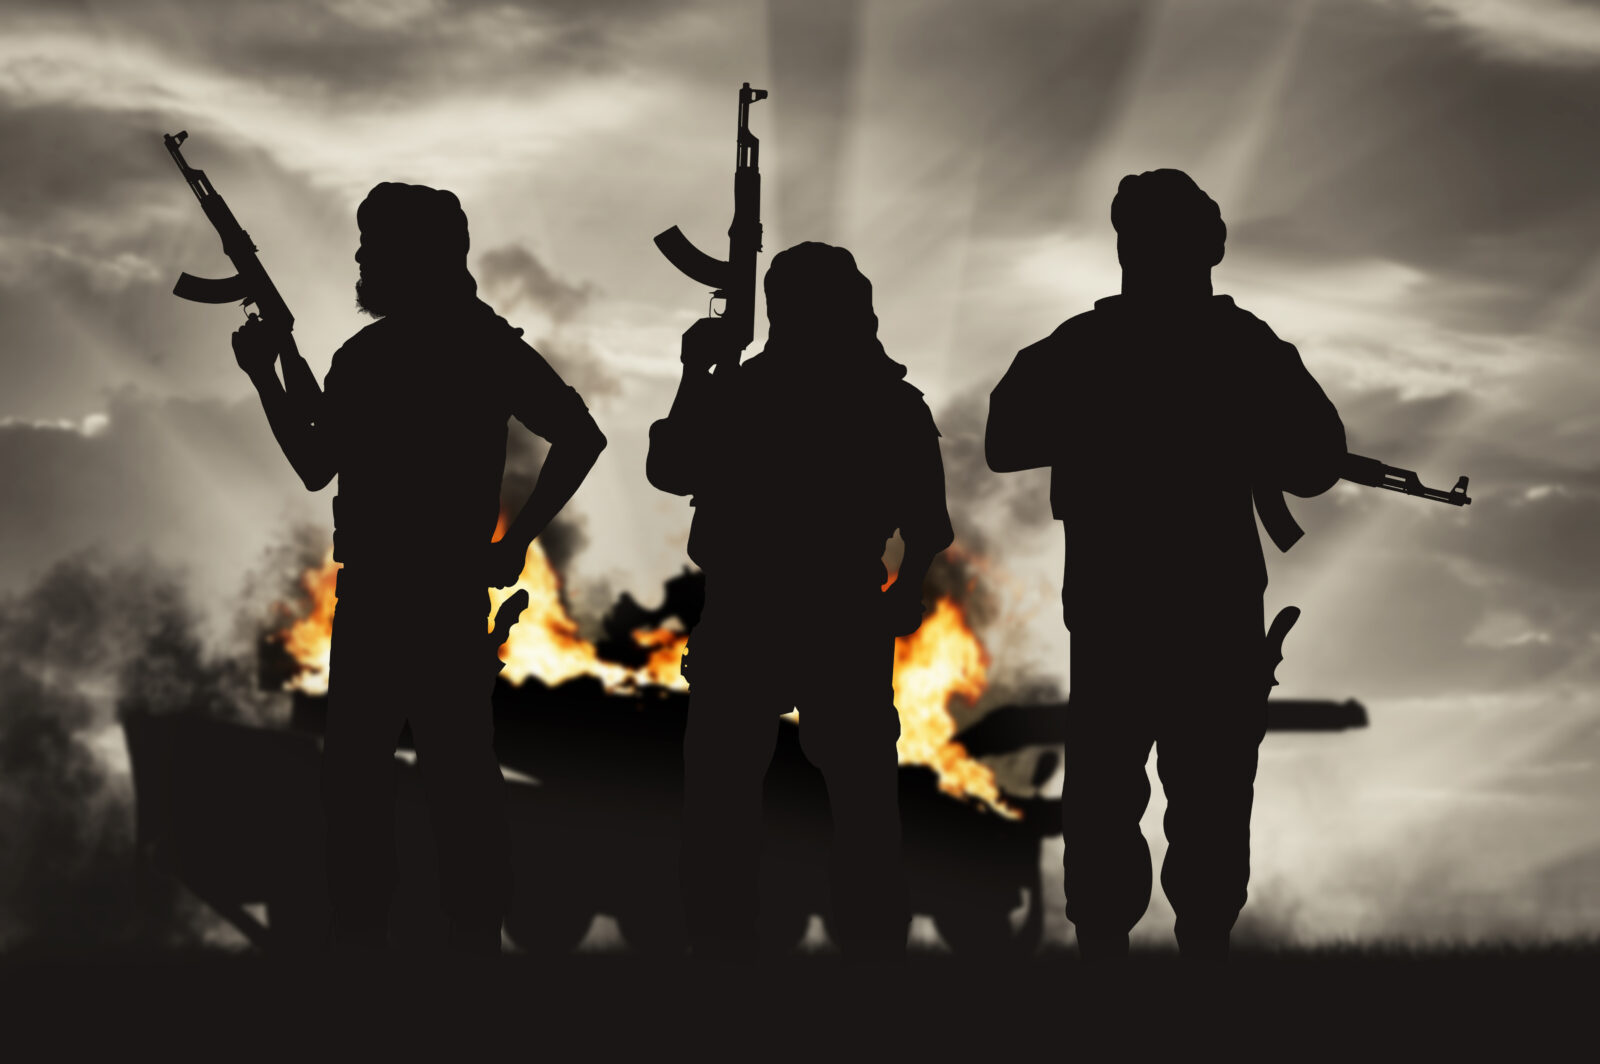 Silhouette of terrorist holding rifle against burning tank